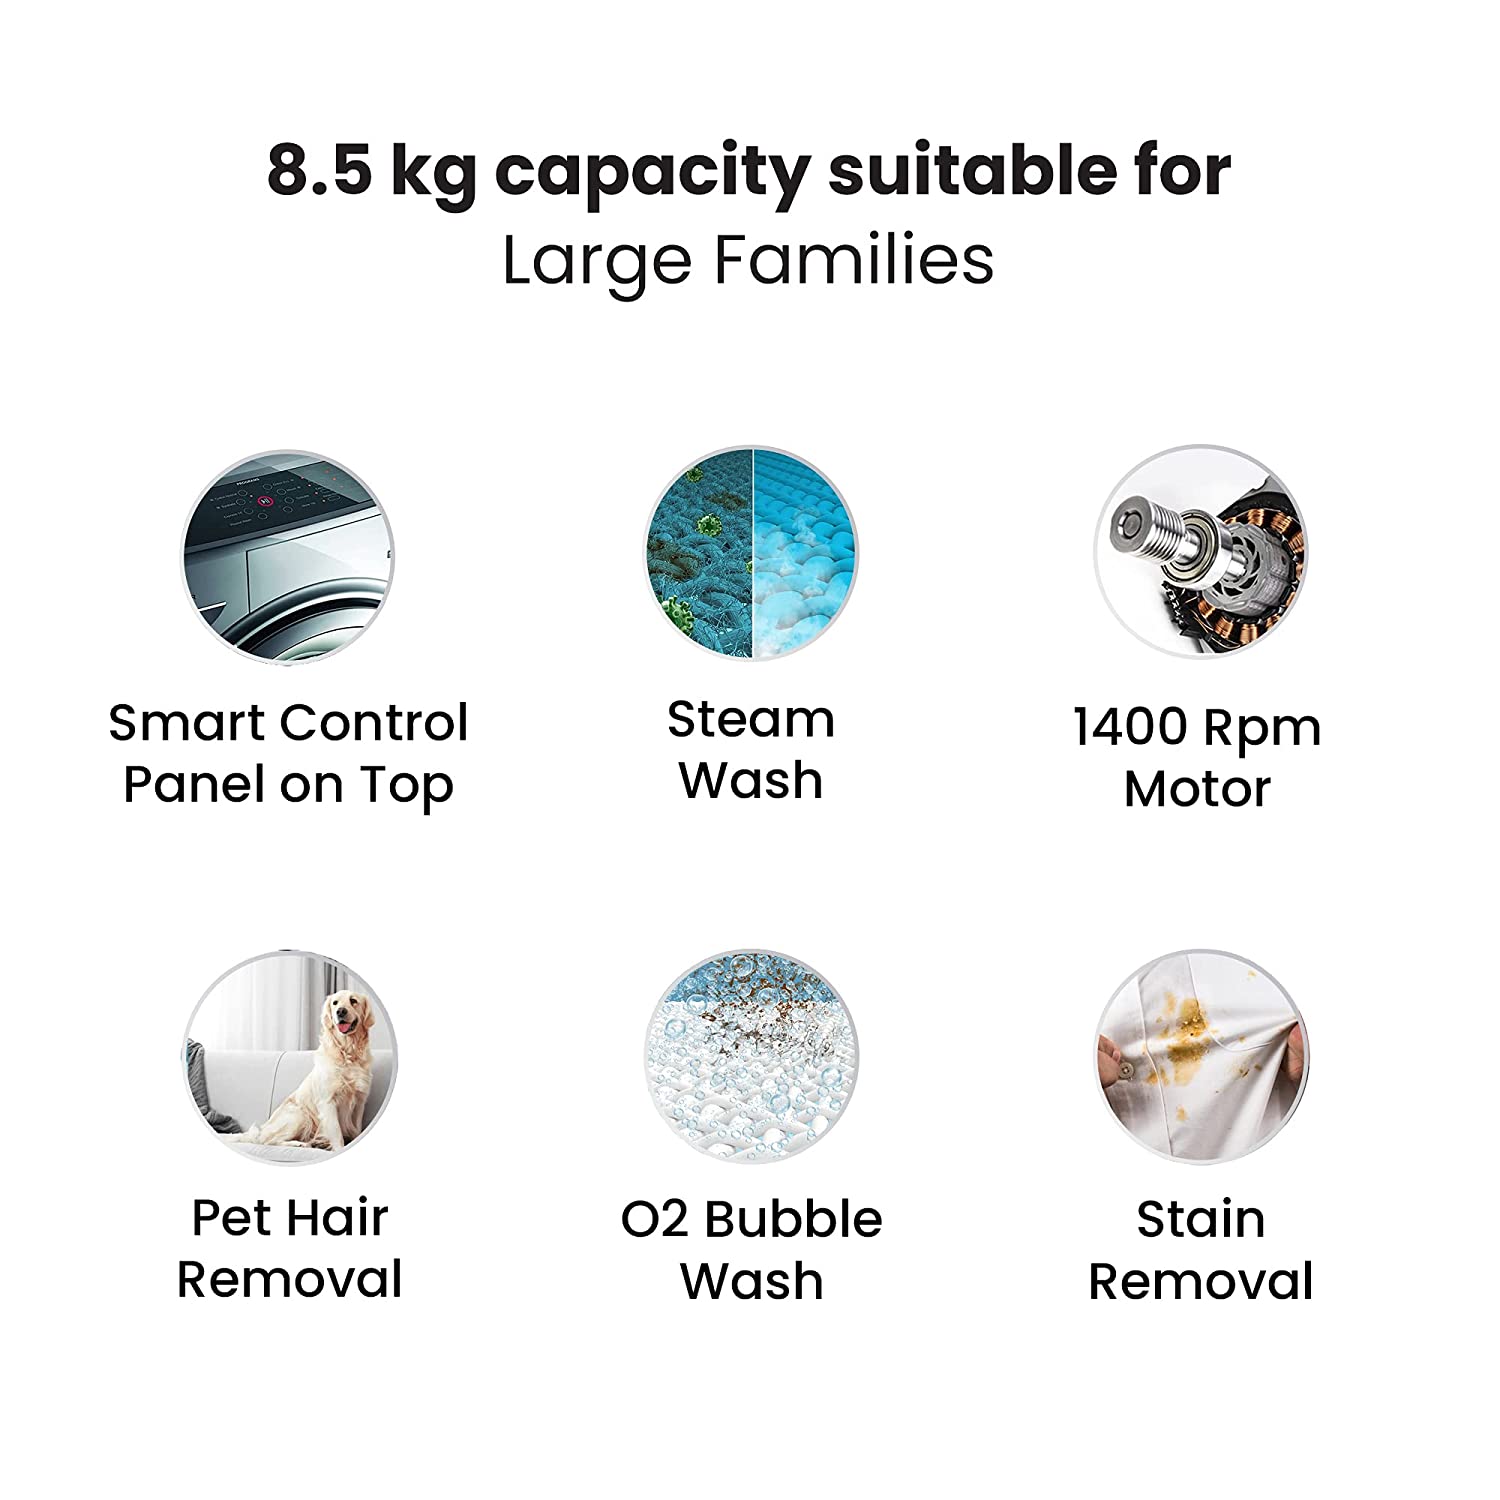 IFB Senator Smart Touch SX 8.5 Kg Fully-Automatic Front Loading Washing Machine, Silver